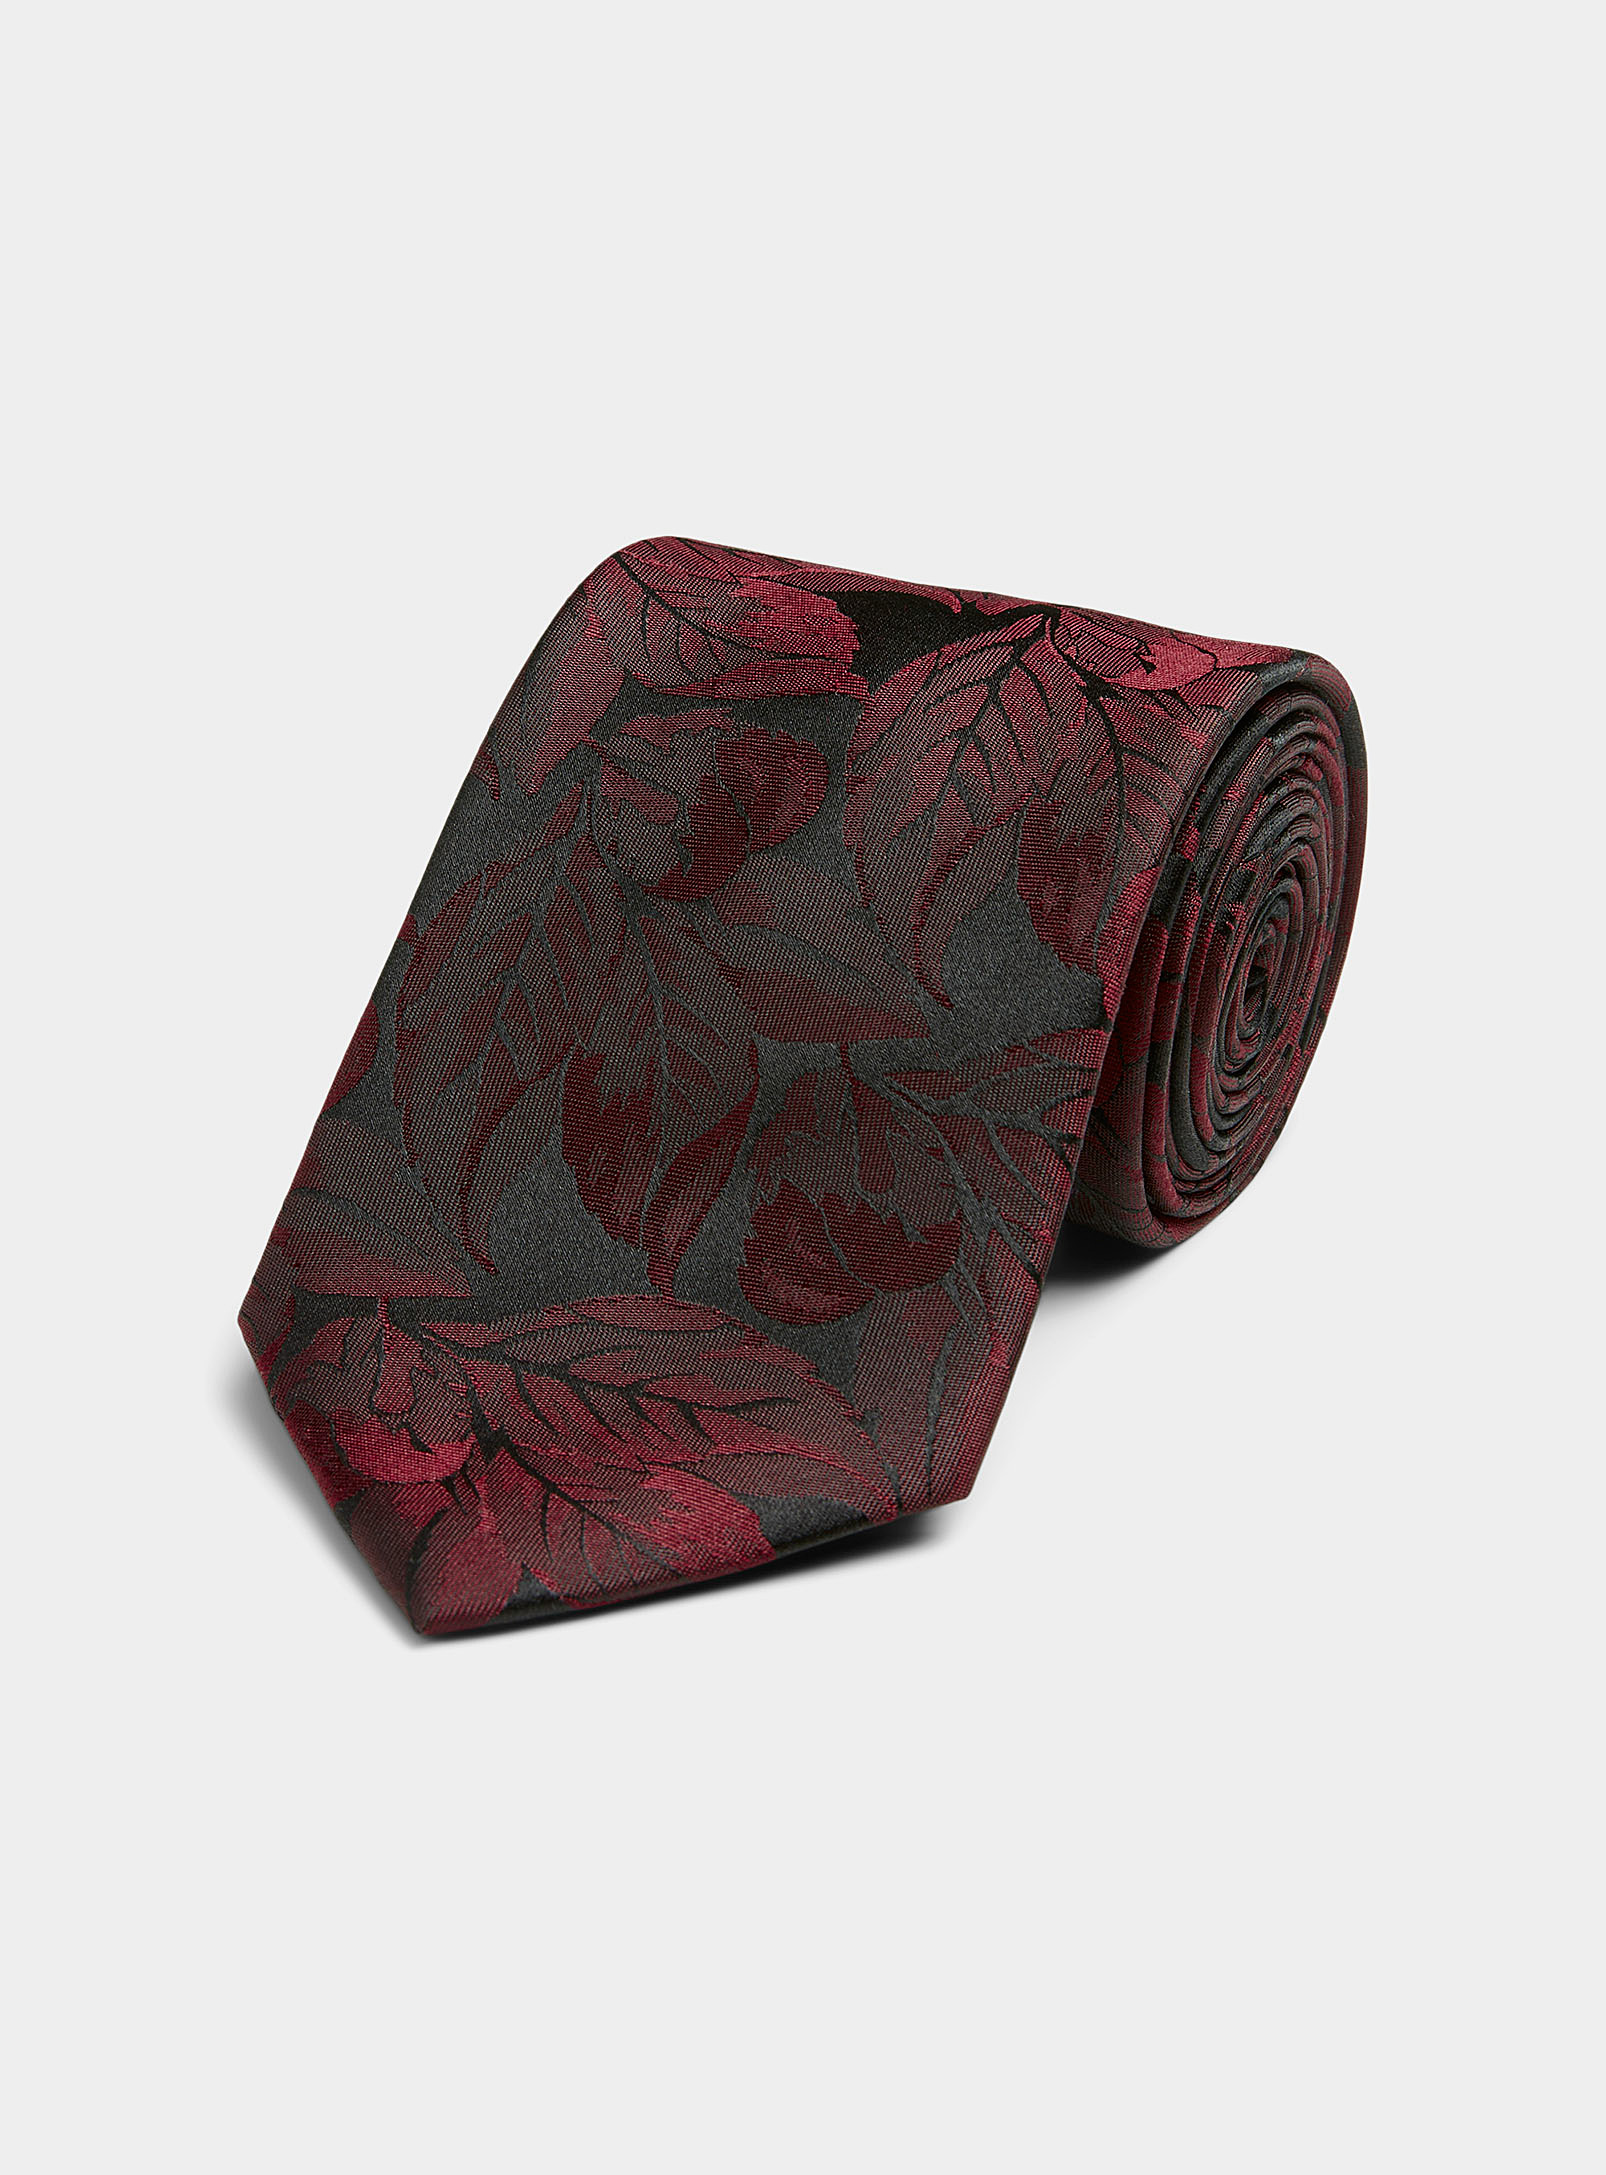 Le 31 - Men's Lush foliage burgundy tie